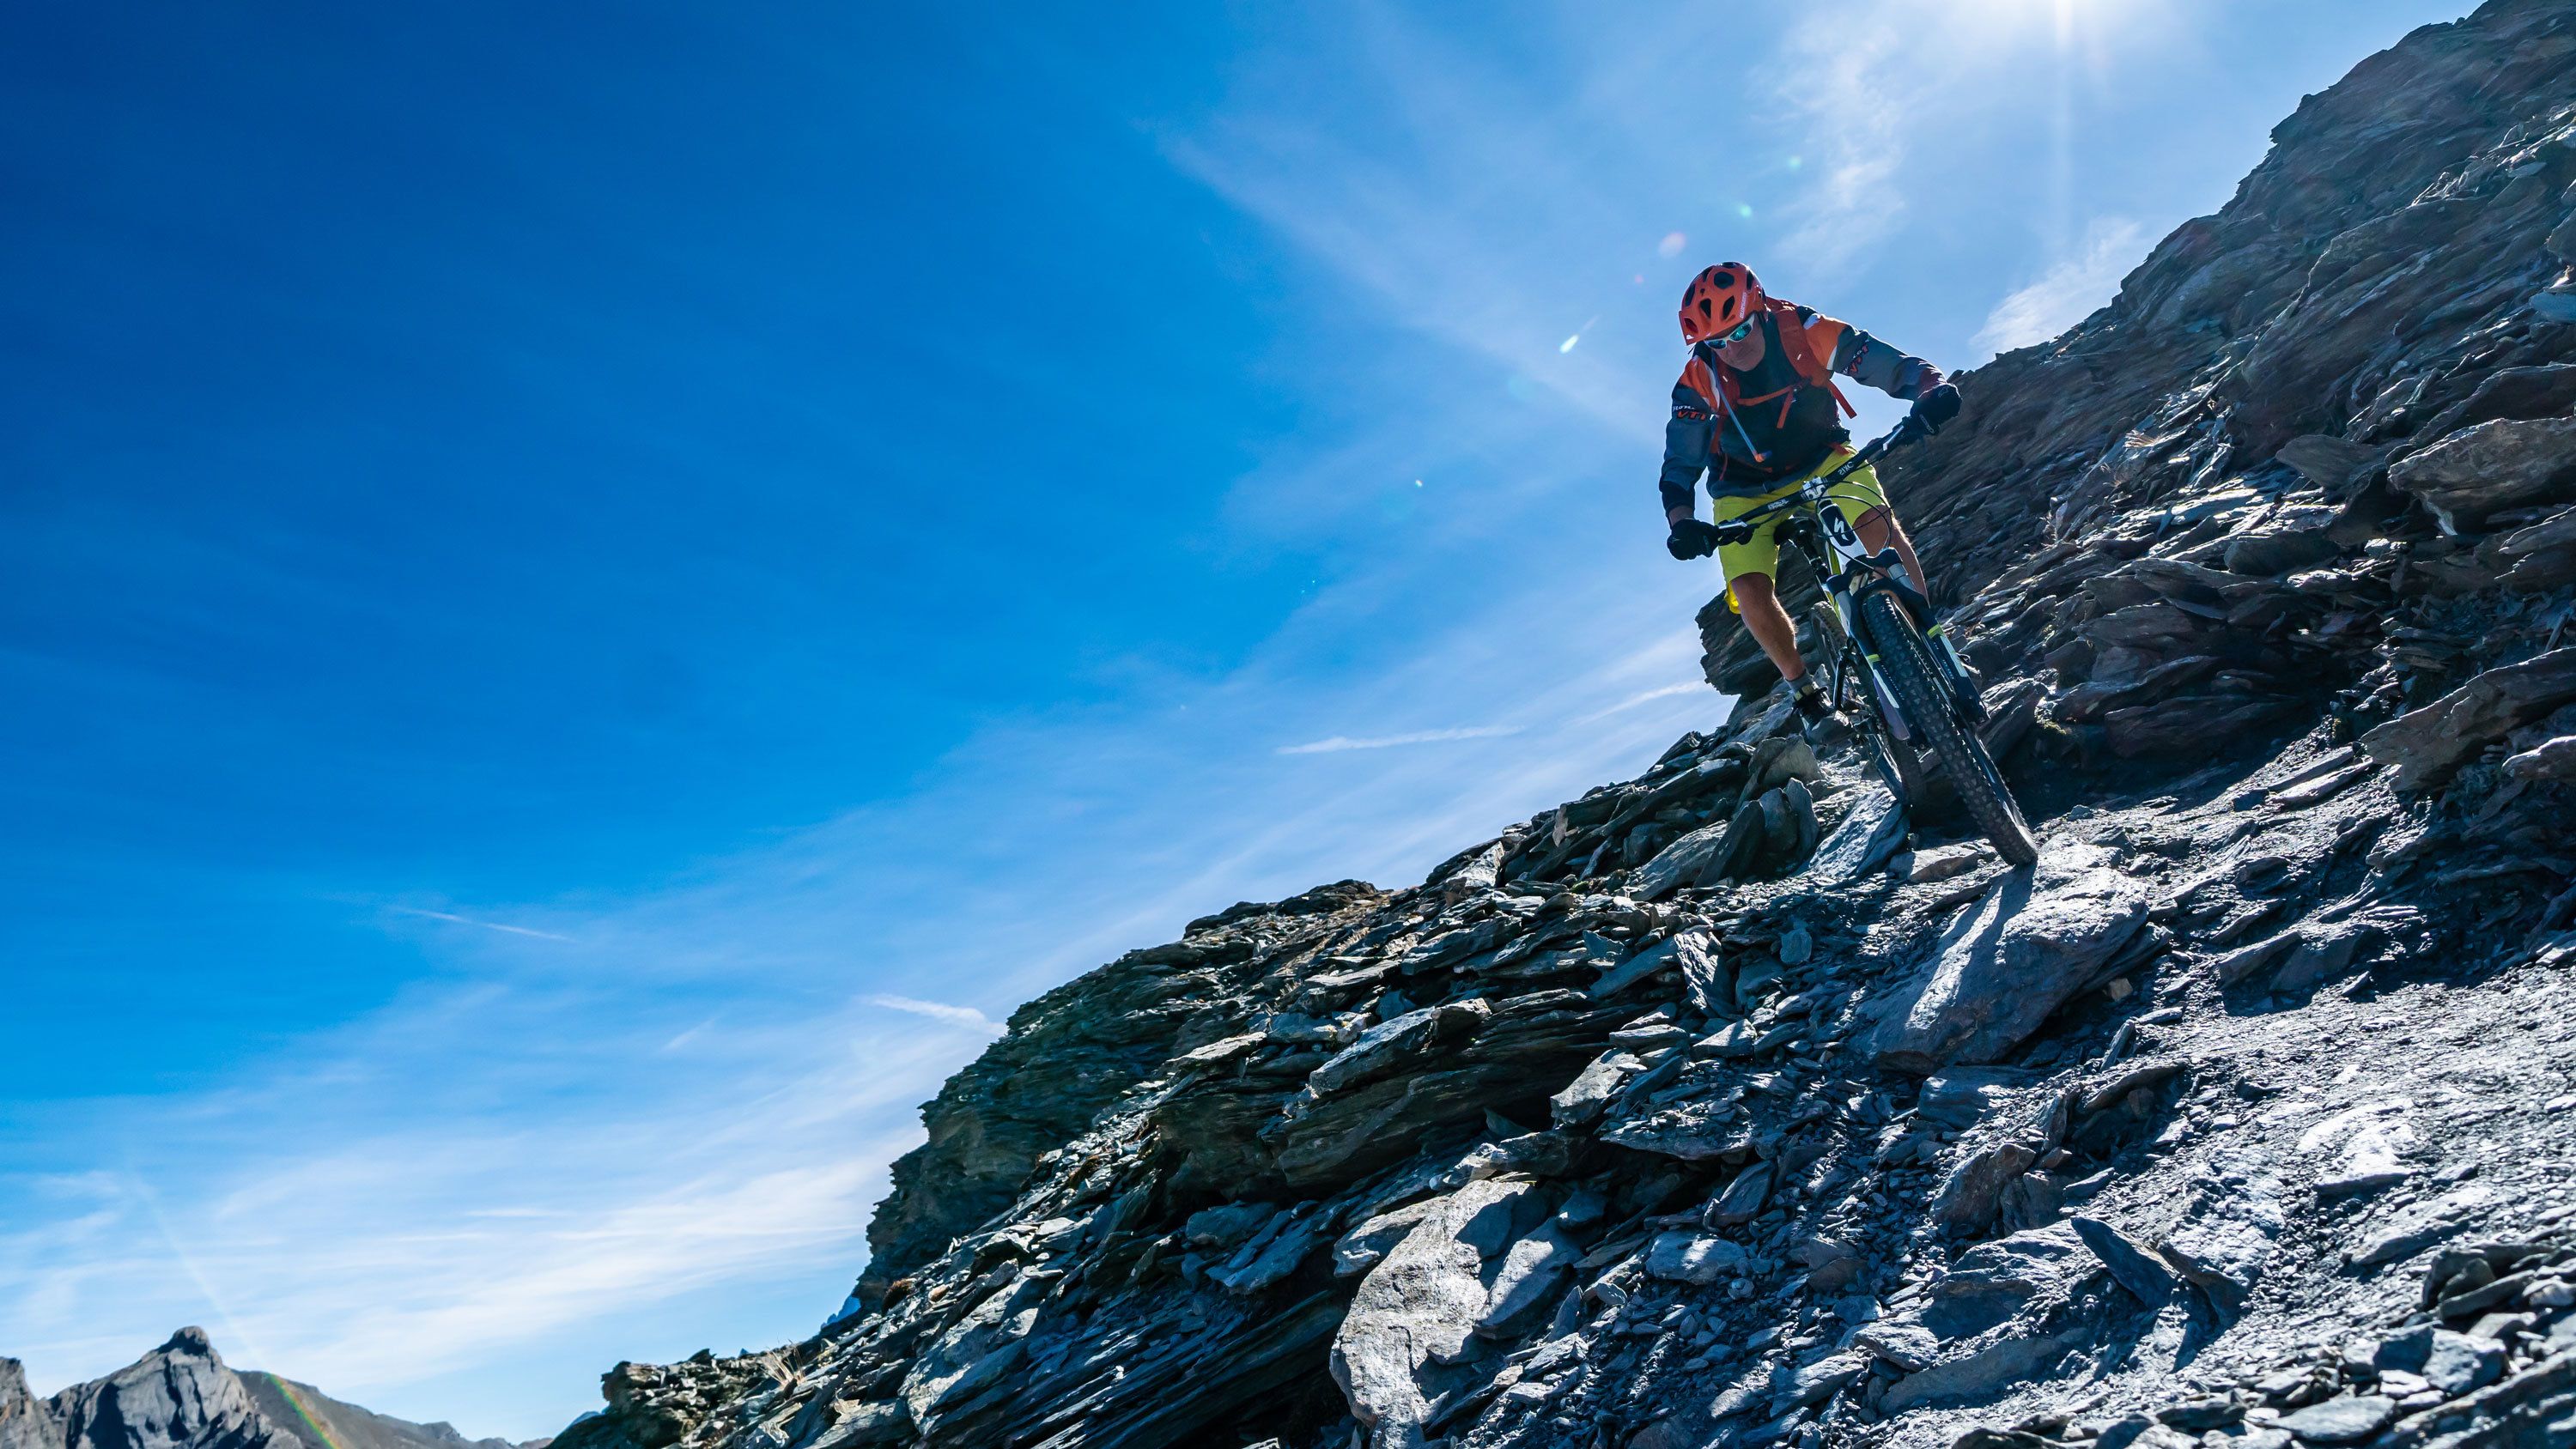 Mountain biking in technical terrain is a perfect ski training